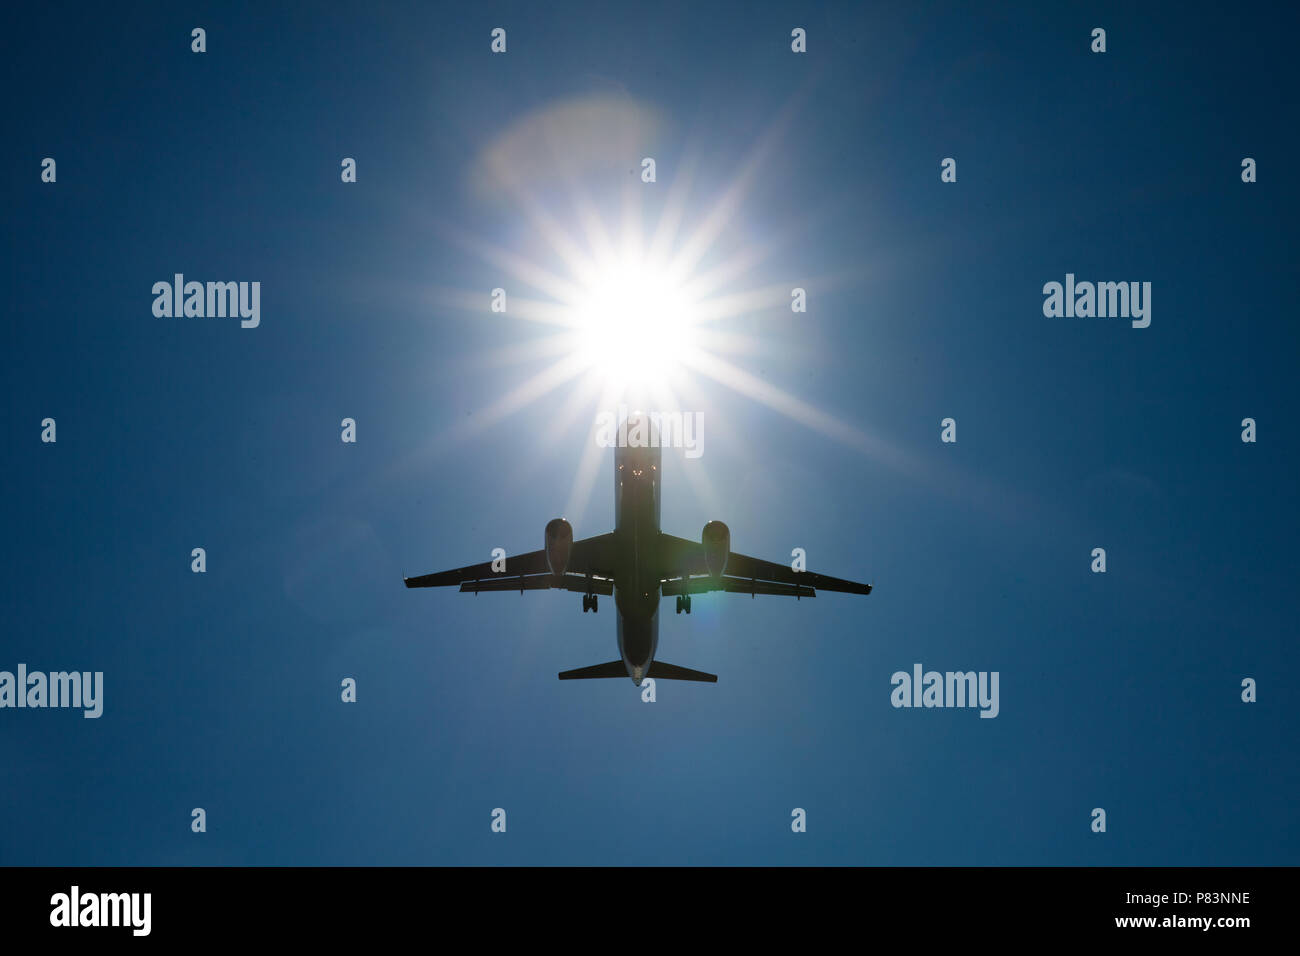 Silhouette of passenger airplane against bright sun Stock Photo